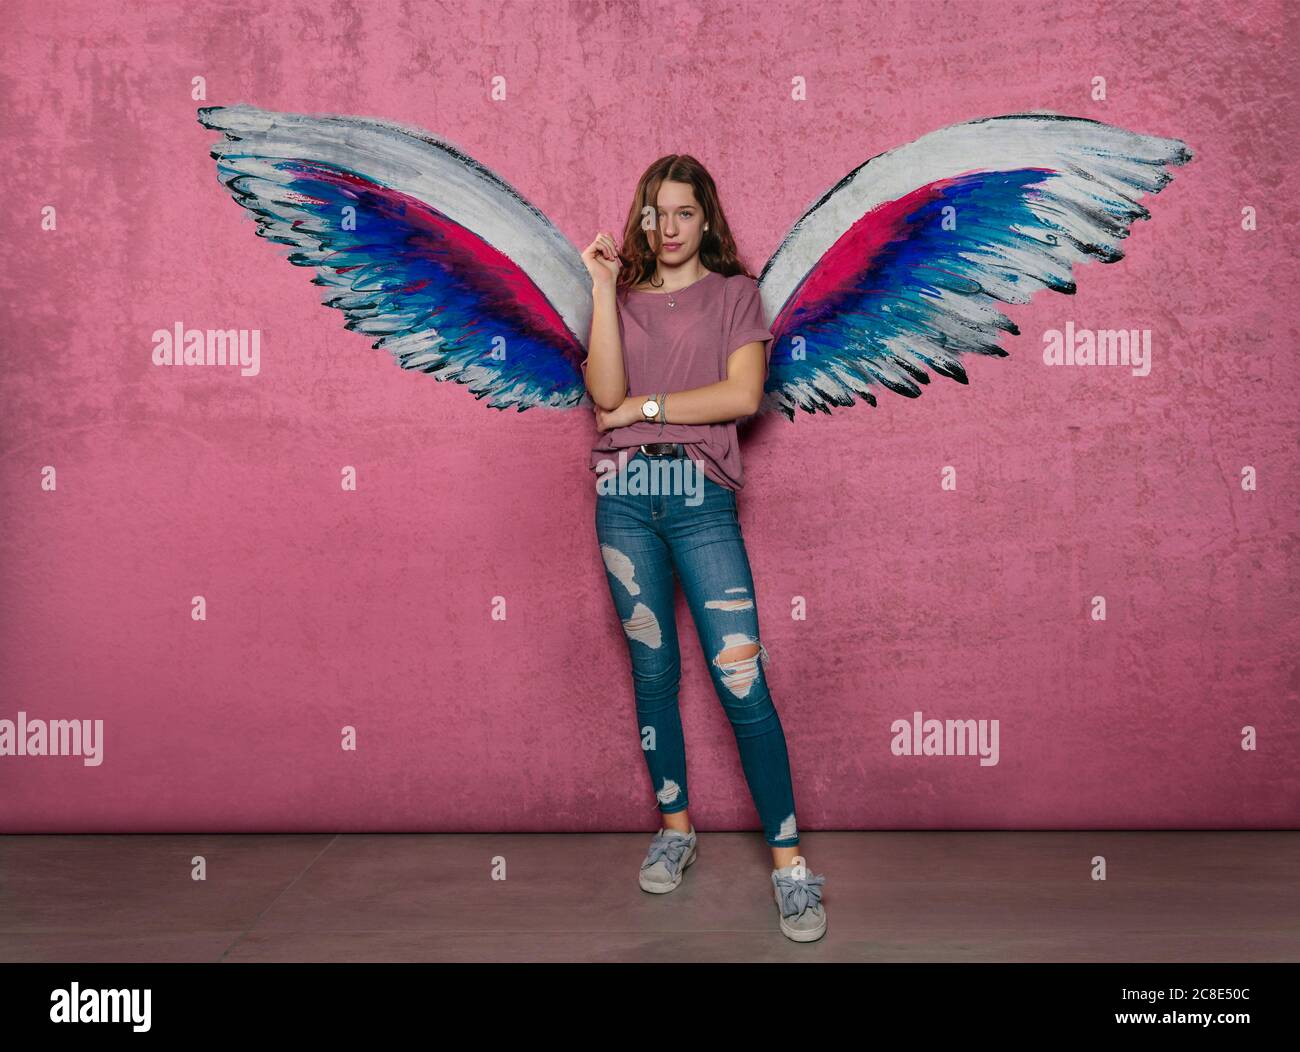 Teenage girl standing against angel wings graffiti on pink wall Stock Photo